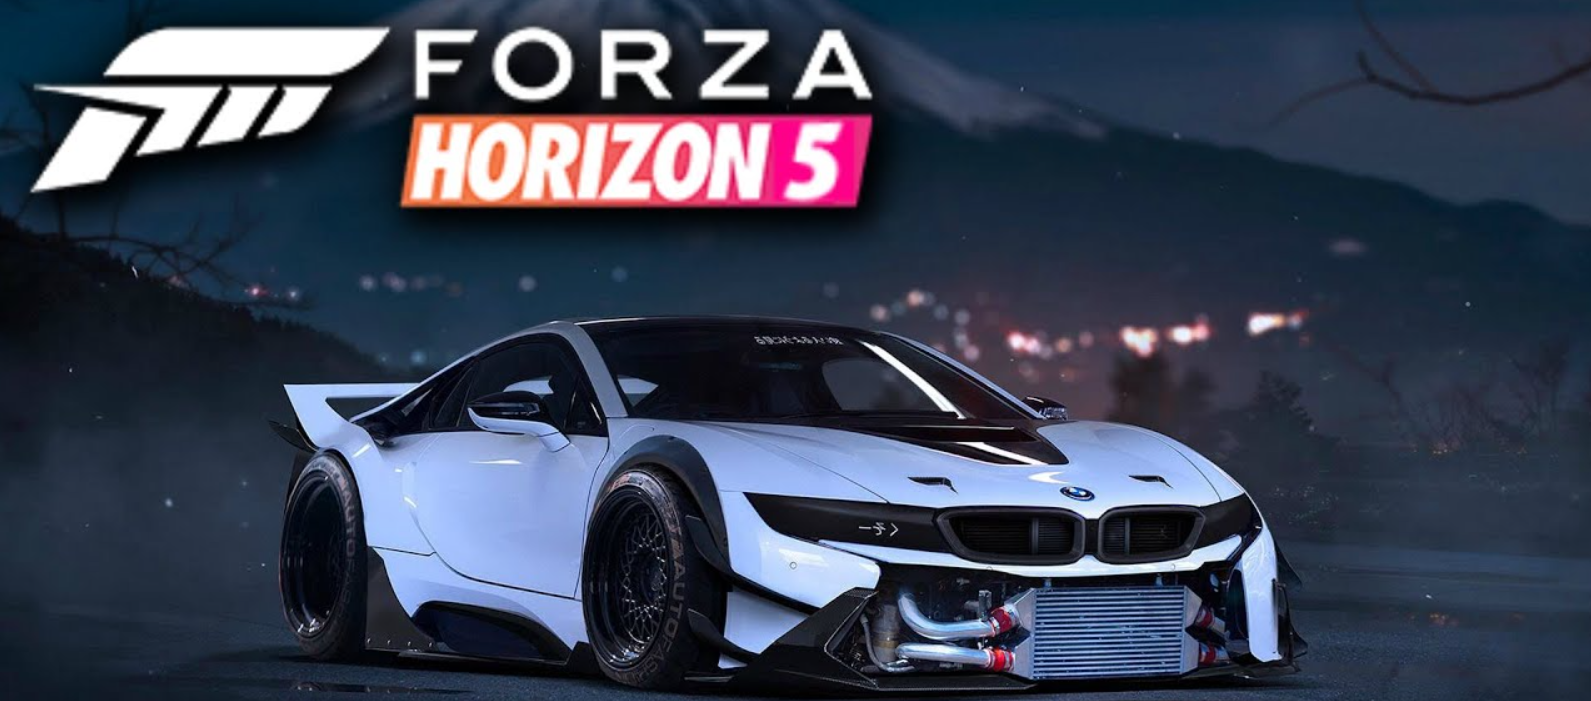 Форза хорайзен 5. Forza Horizon 5 Постер. Forza Horizon 5 обложка. Forza Horizon 5 Premium.